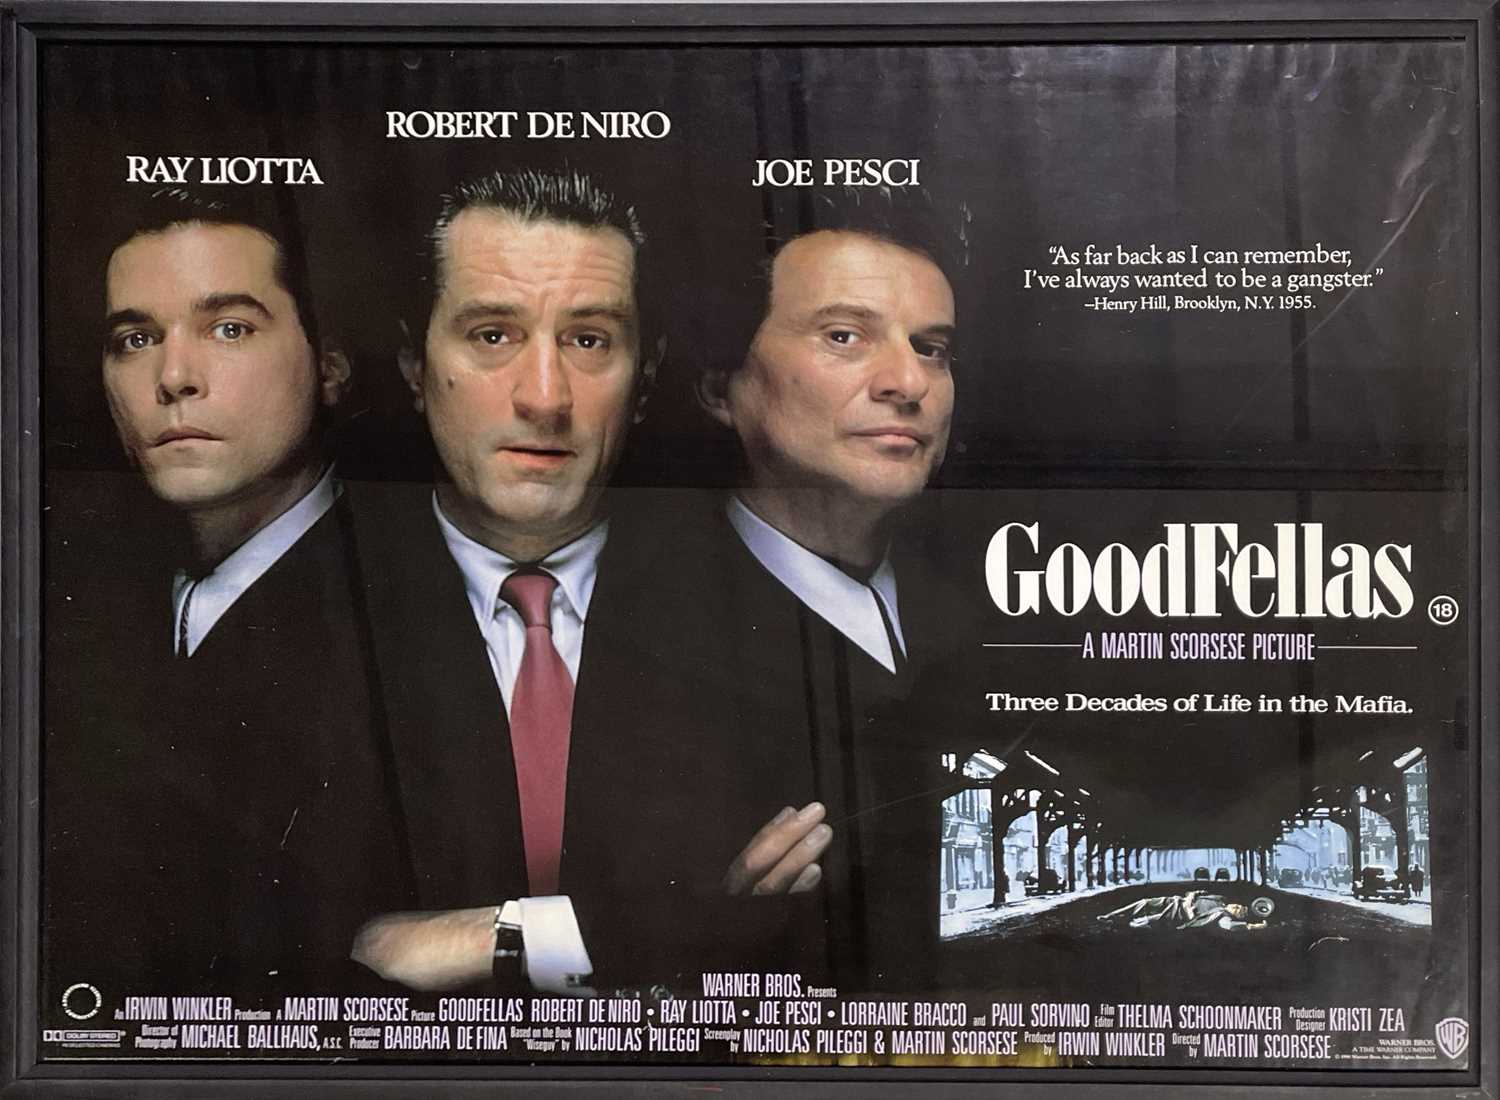 GOODFELLAS (1990) ORIGINAL UK QUAD POSTER.